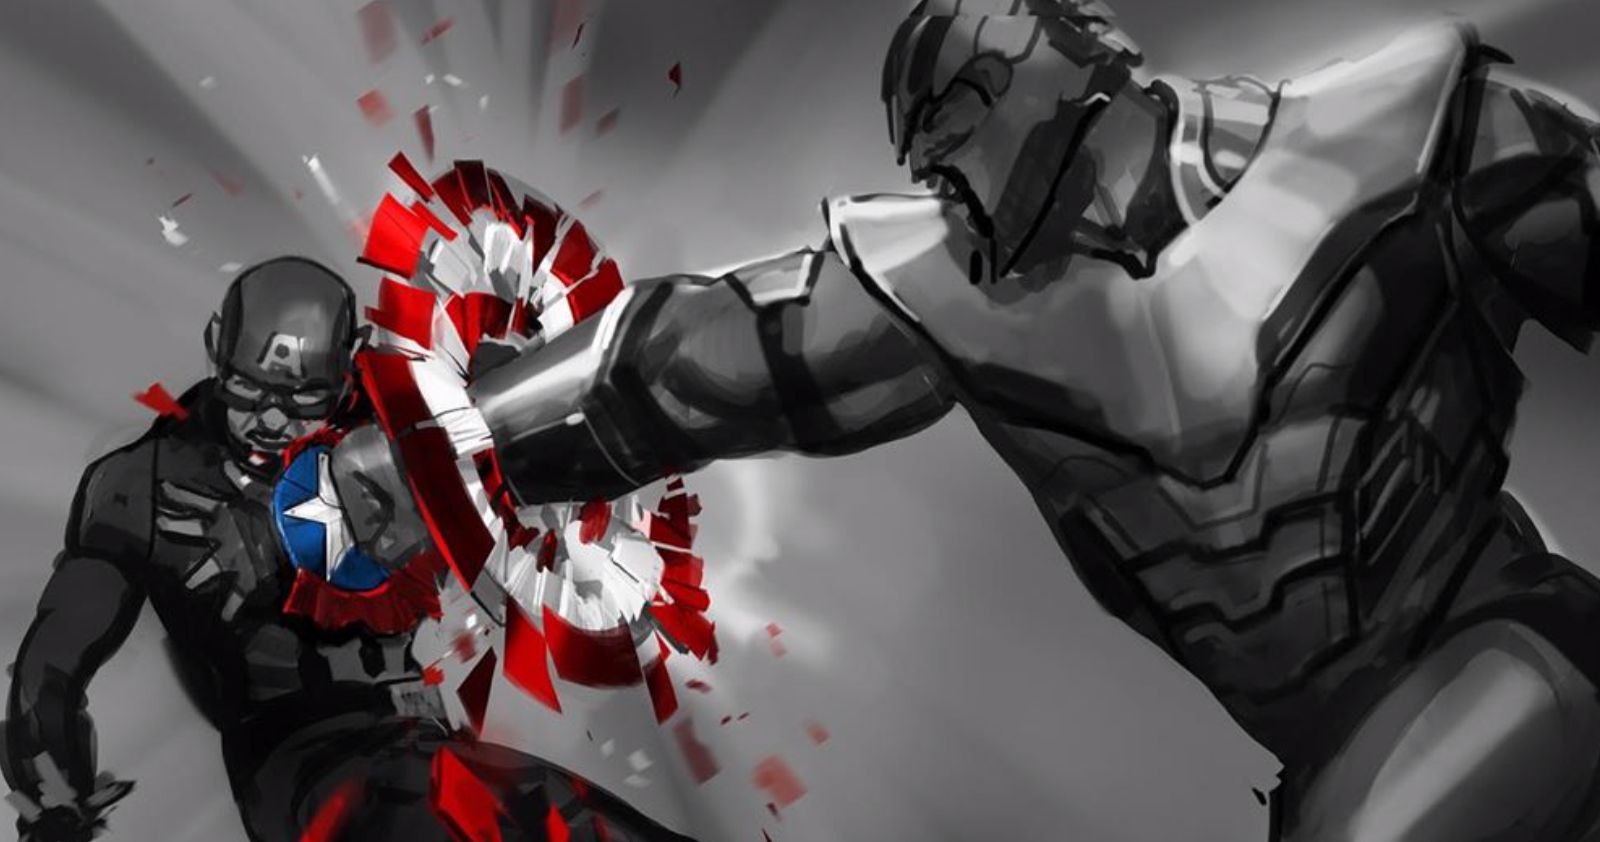 Thanos Obliterates Cap's Shield in Stunning Avengers: Endgame Concept Art